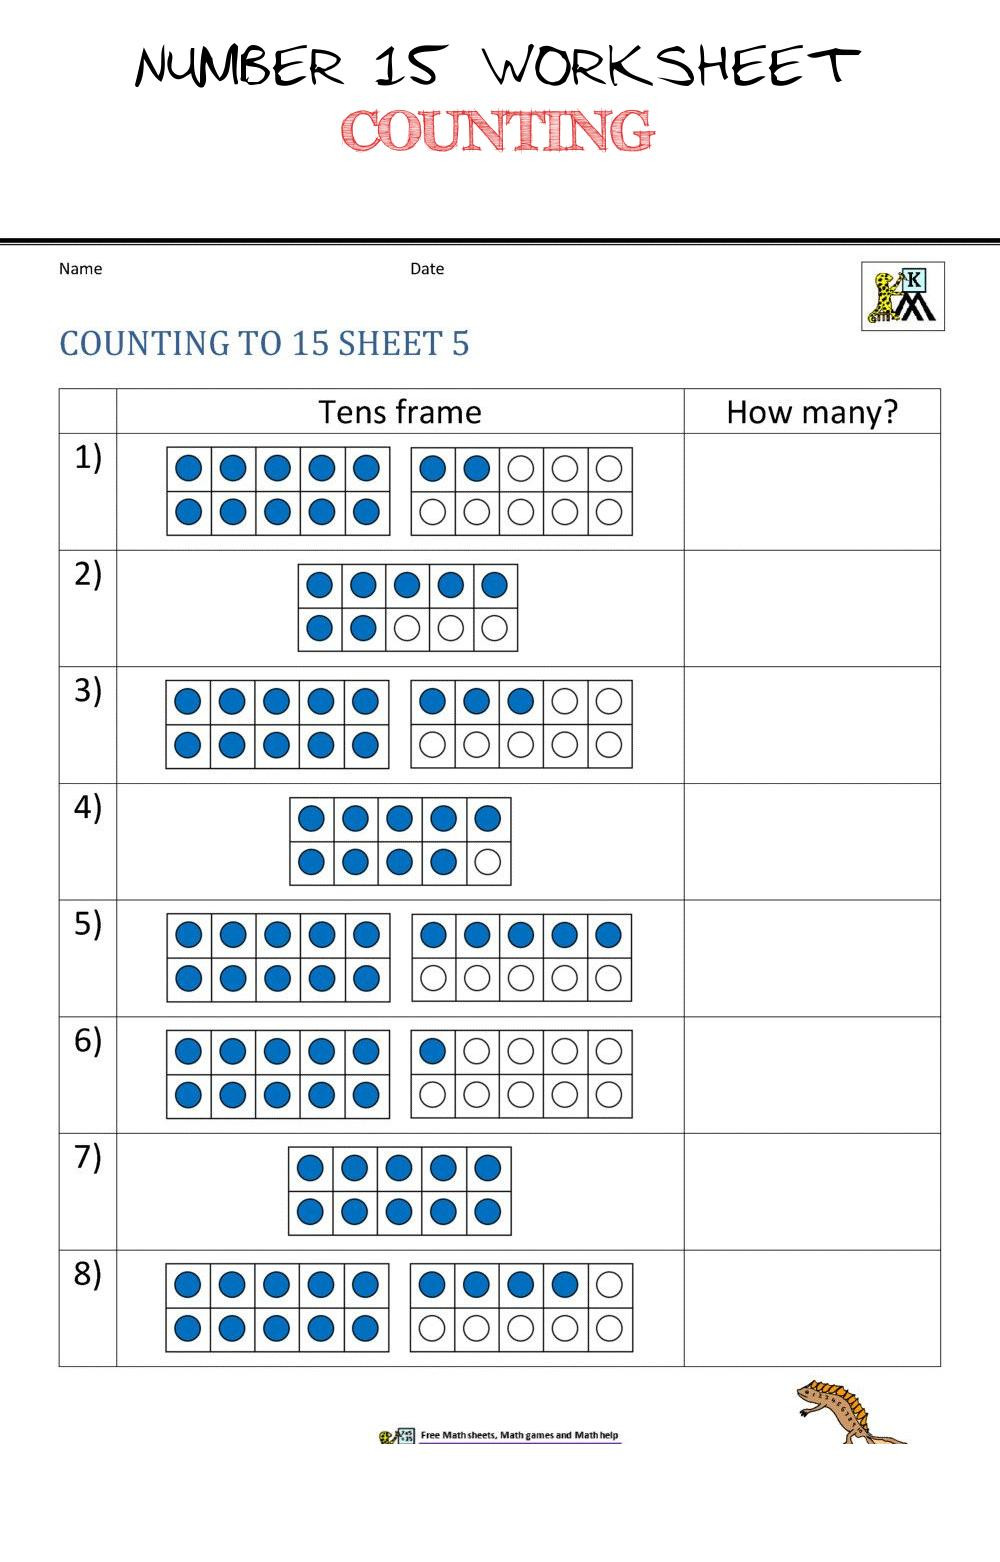 Counting to 20 Worksheet Number 15 Worksheet Counting 3 Number 15 Worksheet Counting